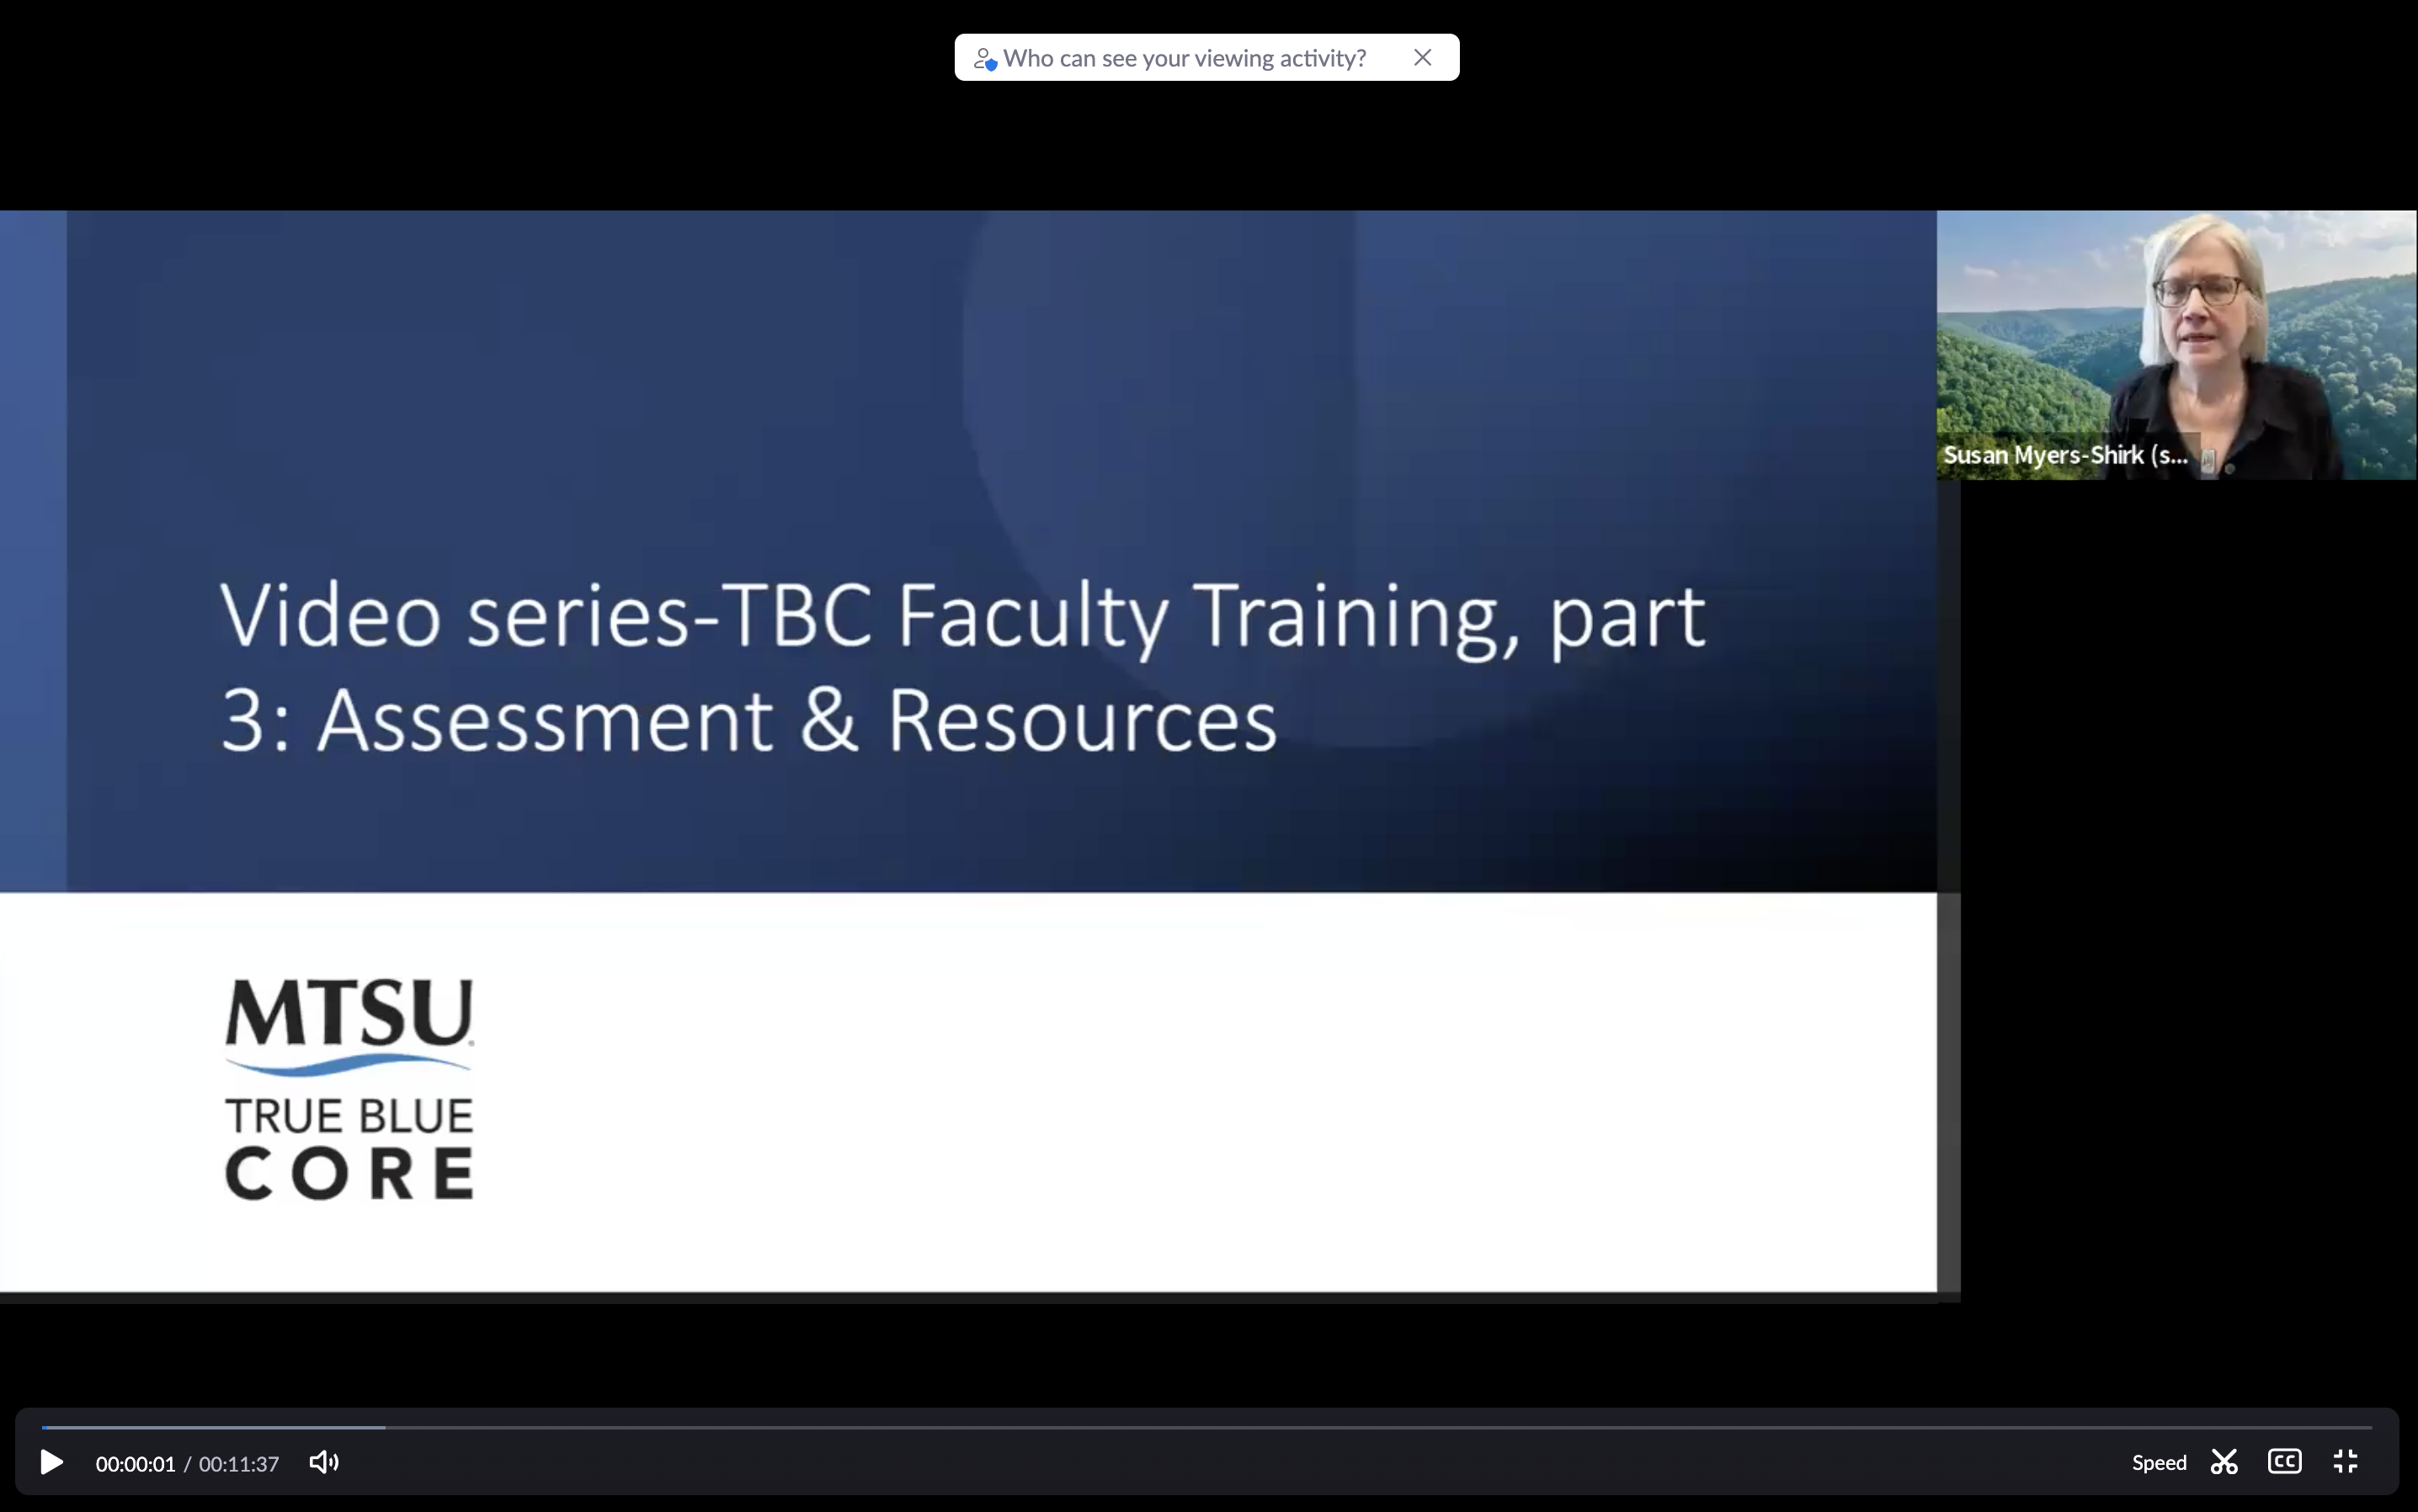 Screenshot of part 3 training video